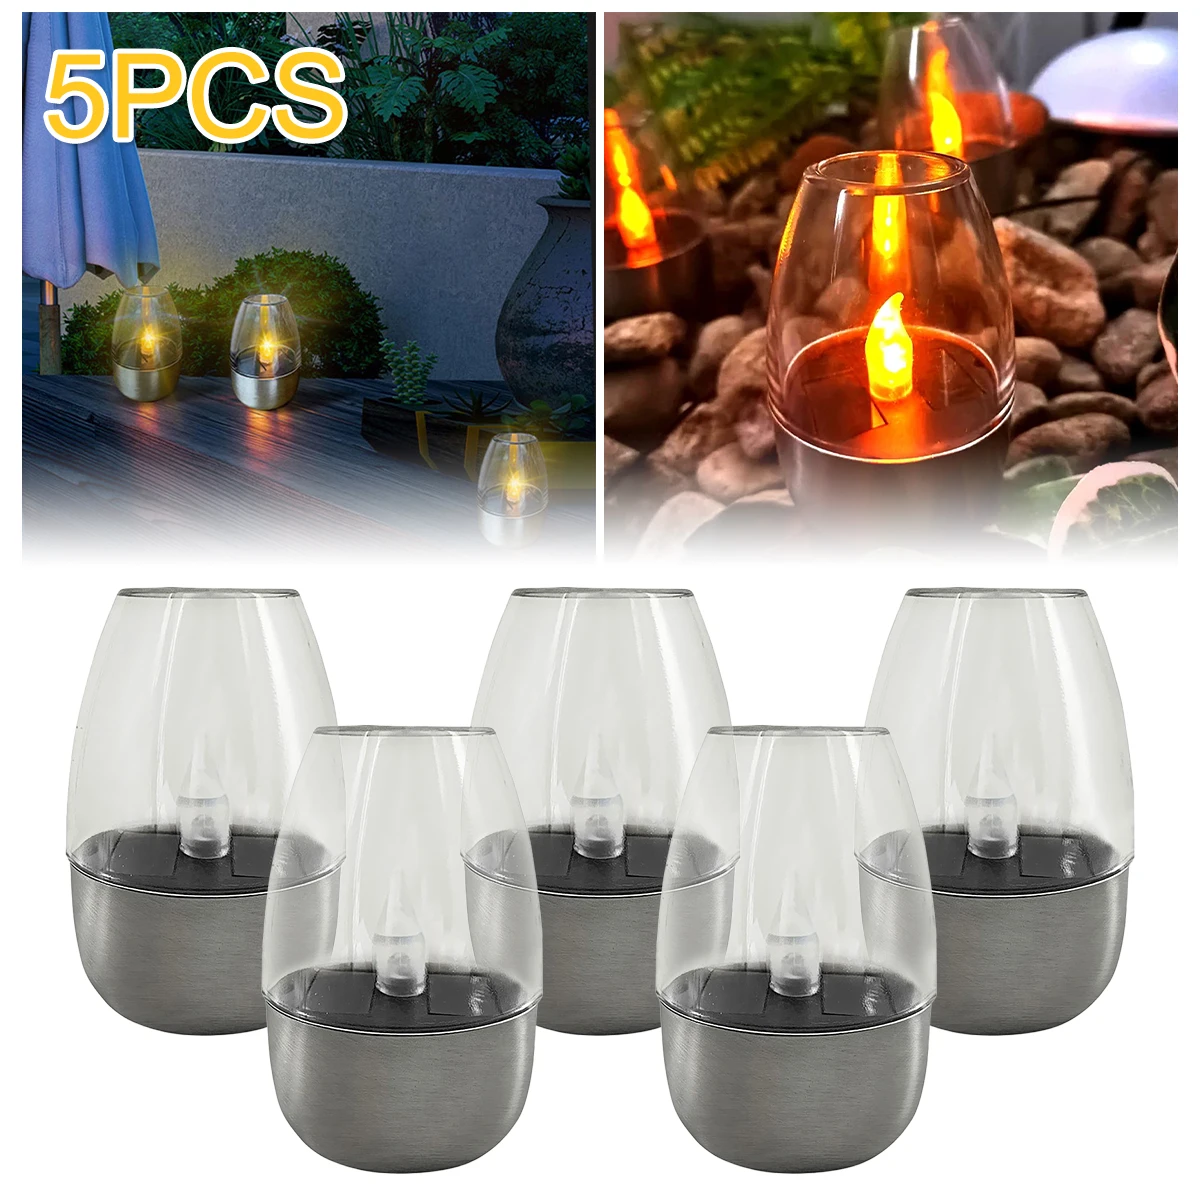 Le lamp solar light outdoor garden led candle light ip44 waterproof tea lamps deck thumb155 crop